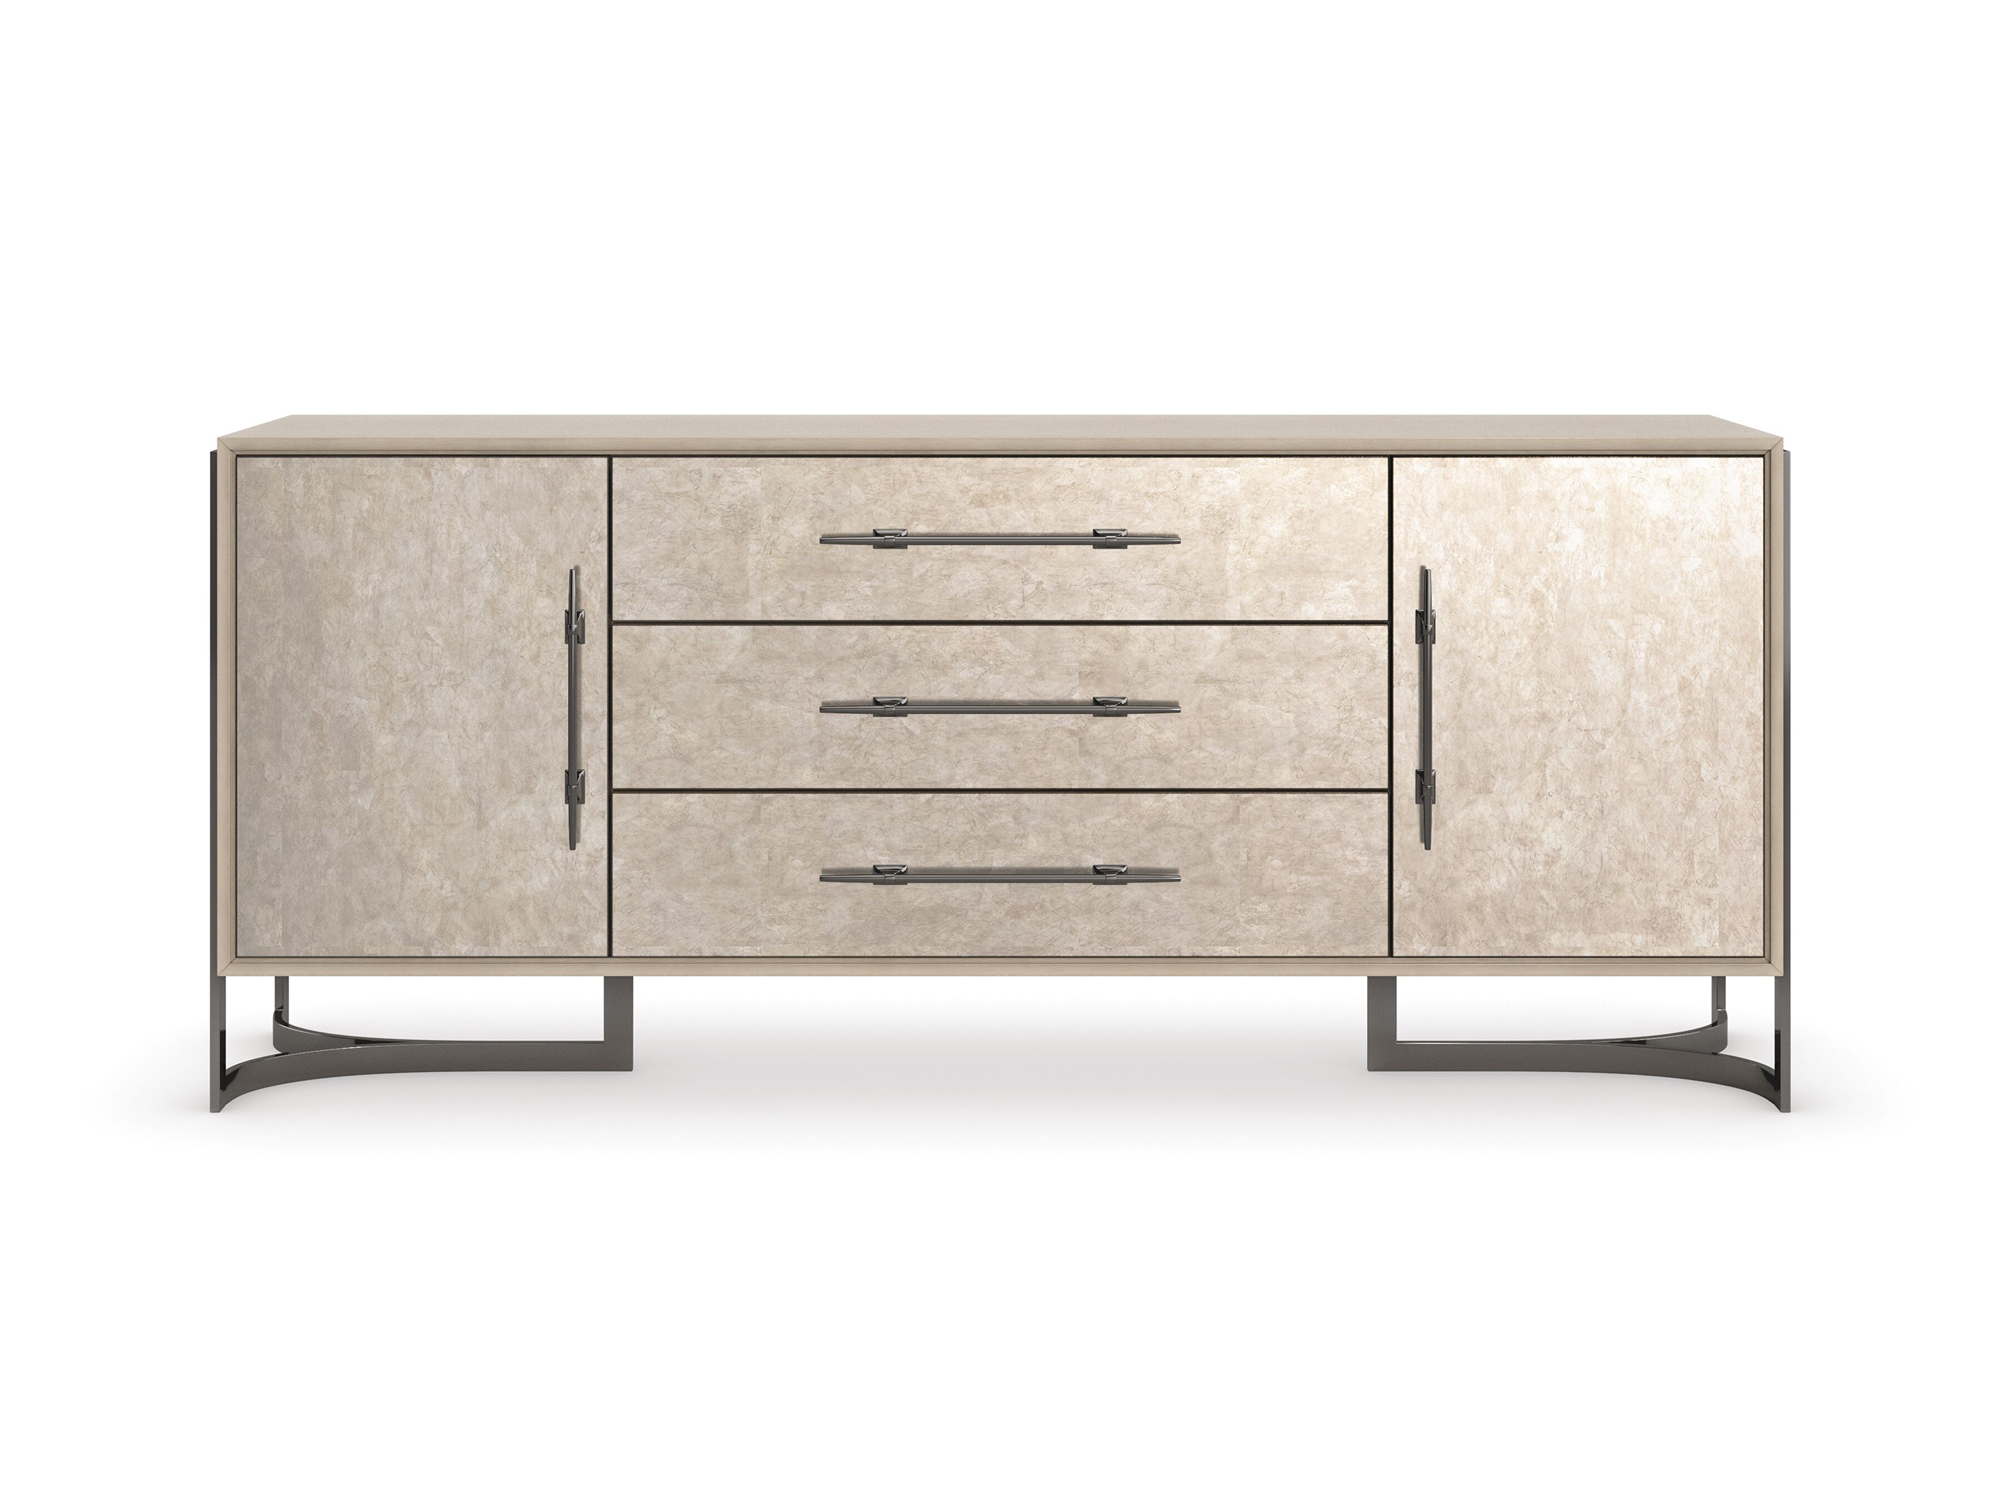 Babs Folded Again Sideboard - Euro Living Furniture